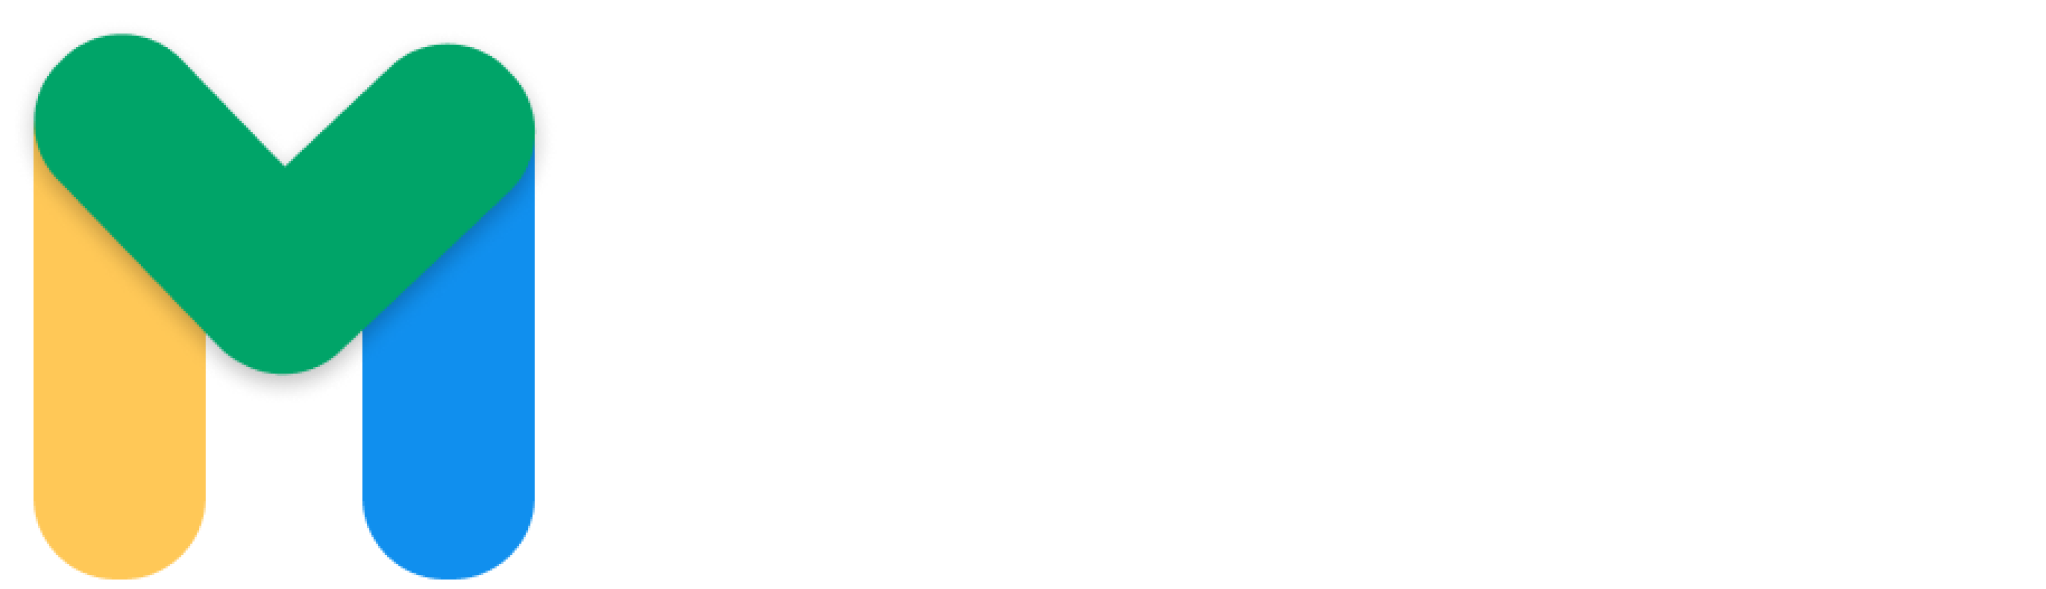 mobiloitte white logo